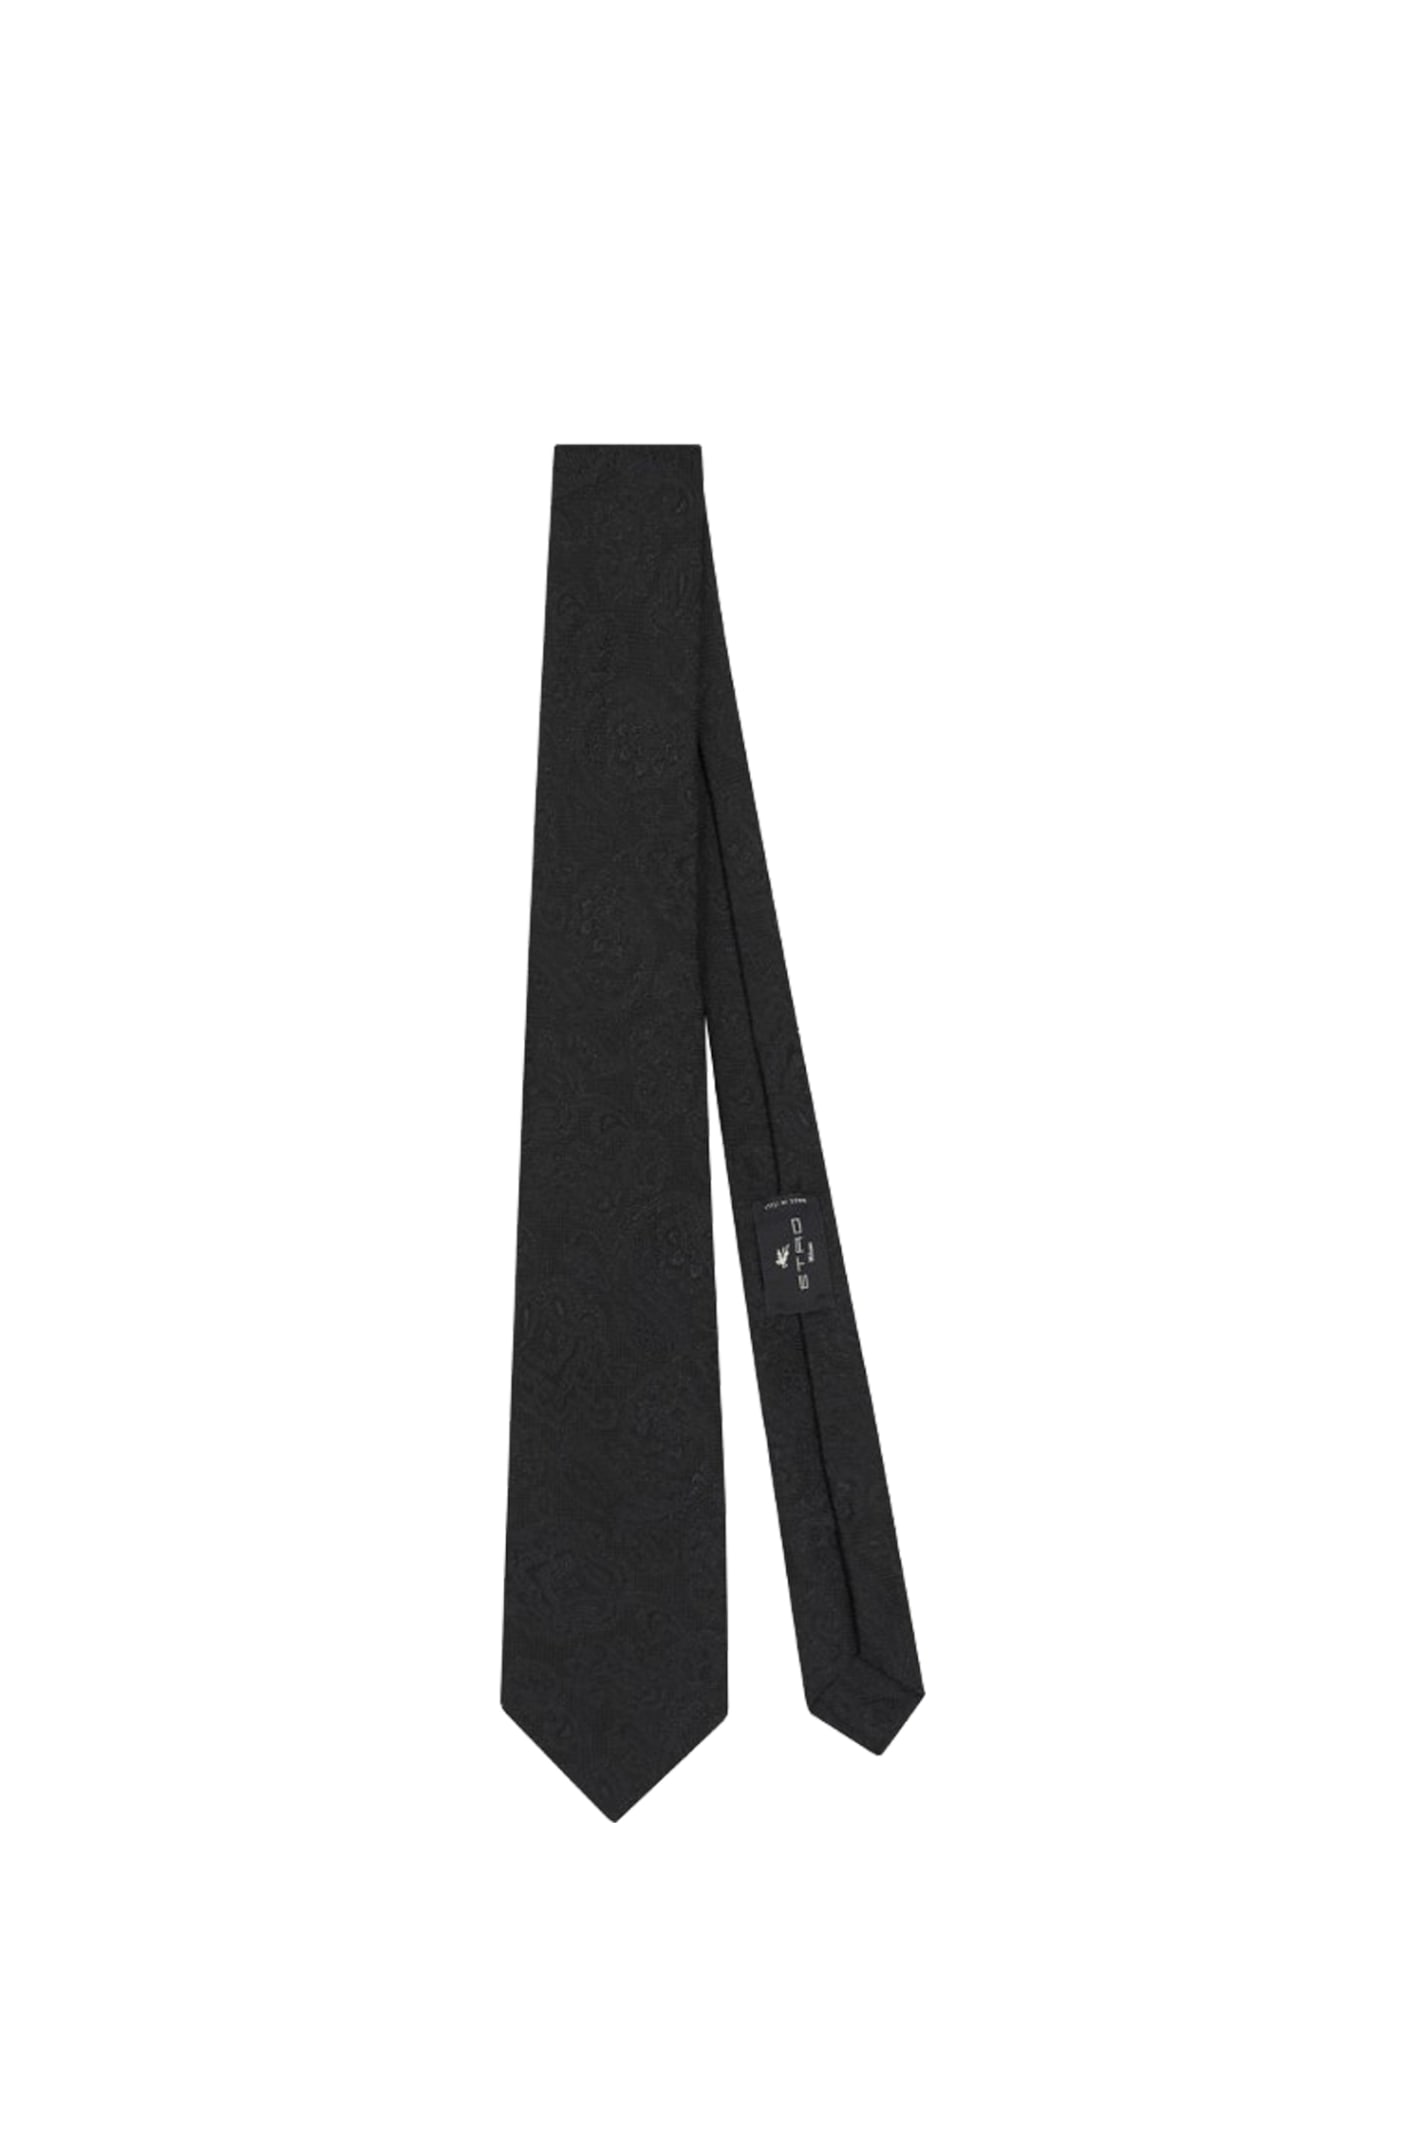 Etro Tie In Black